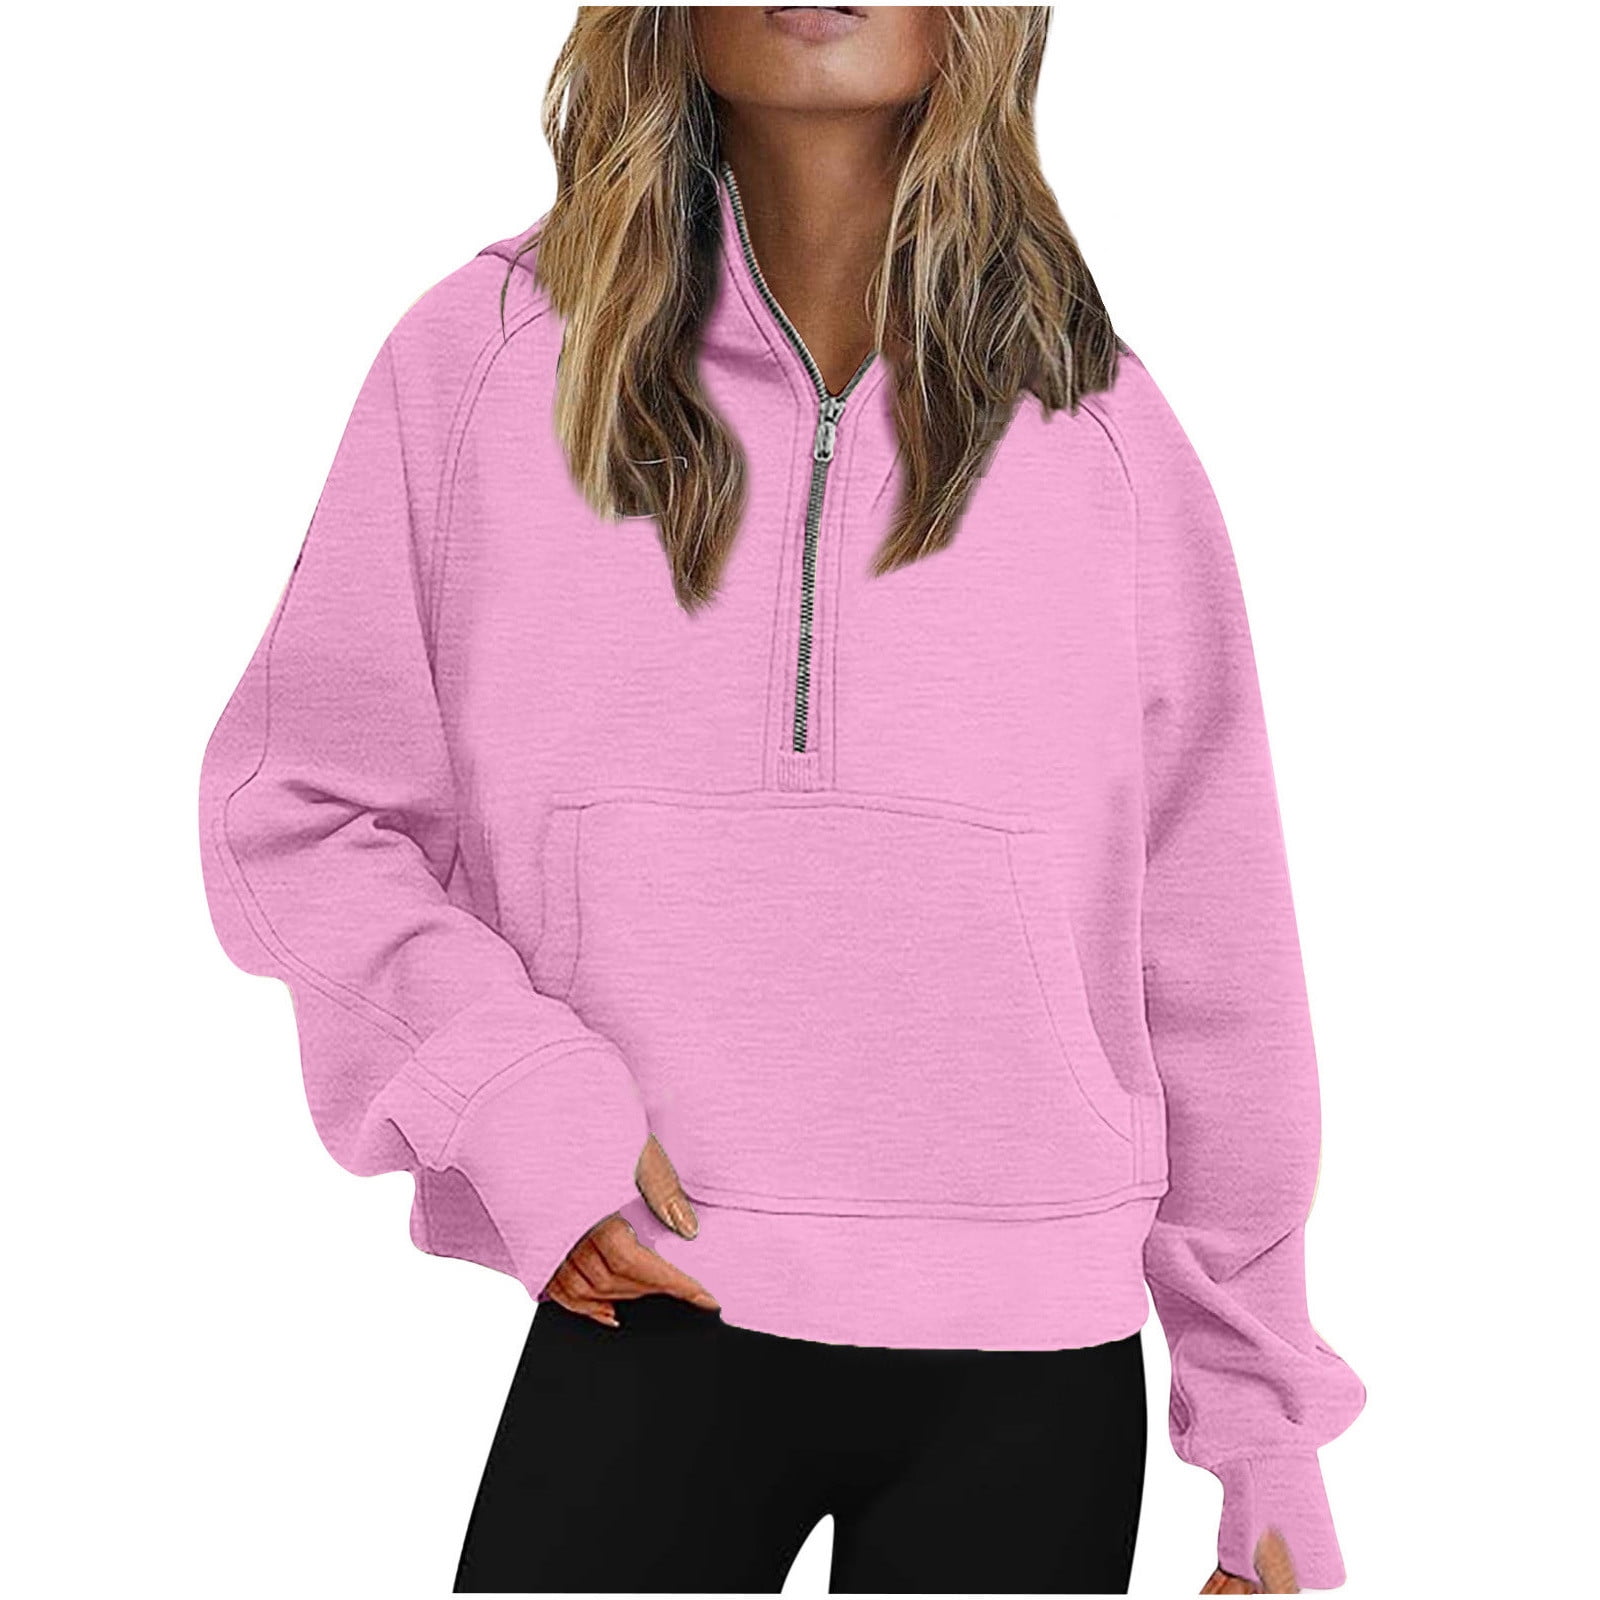 Yyeselk Womens Casual Cowl Neck Hoodie Color Block Fleece Tunic Sweatshirt  Drawstring Pullover Tops Loose Fit Blouse Shirt Hoodies Hooded Pink XL 